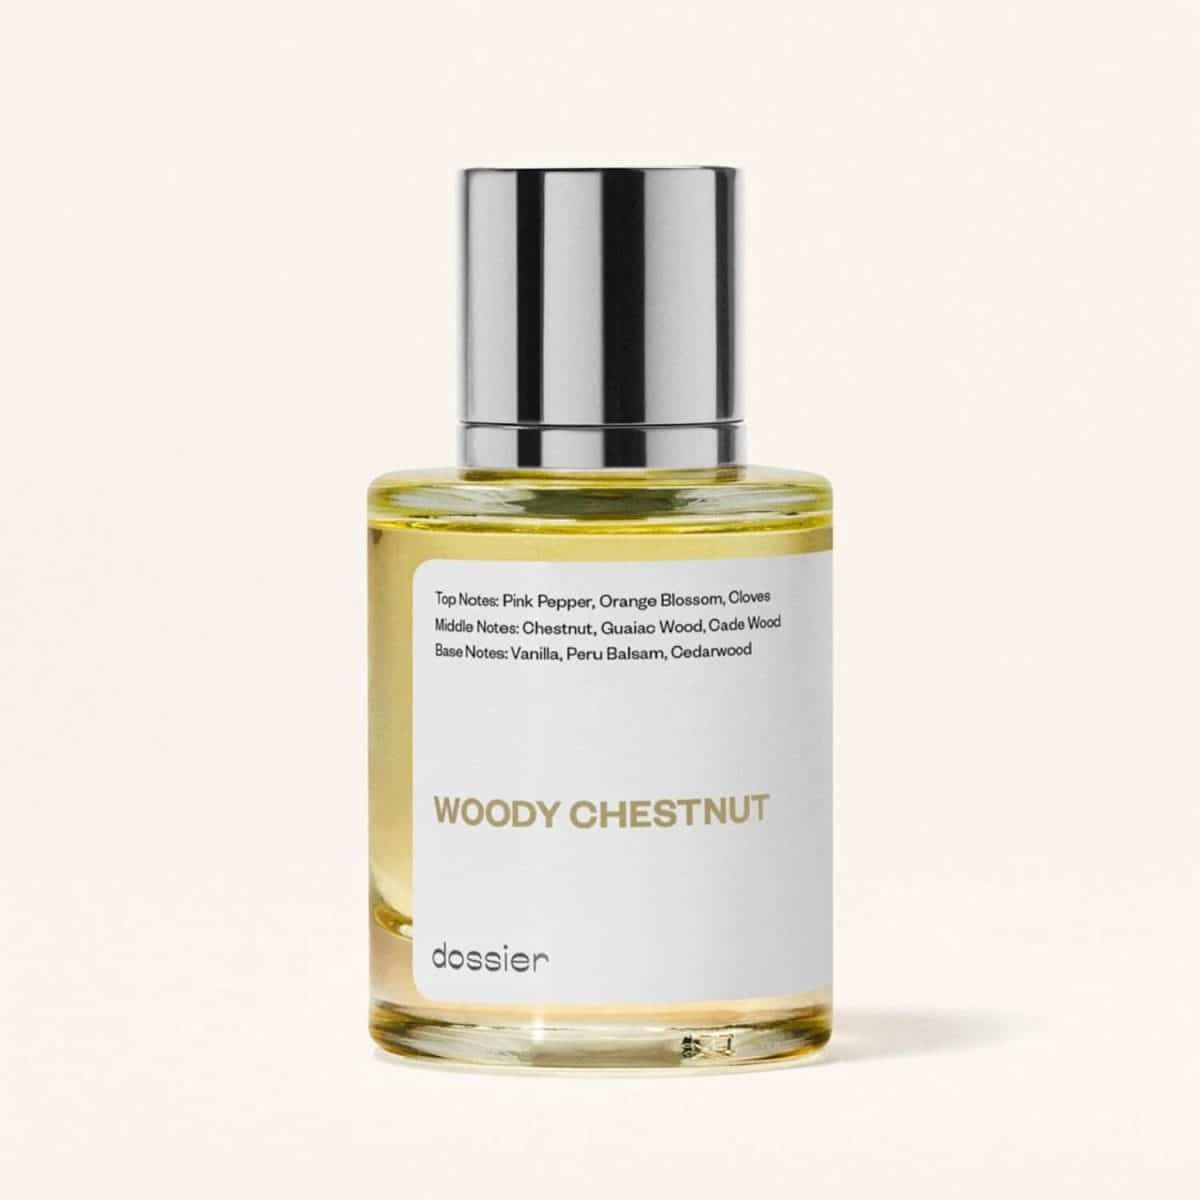 dossier woody chestnut